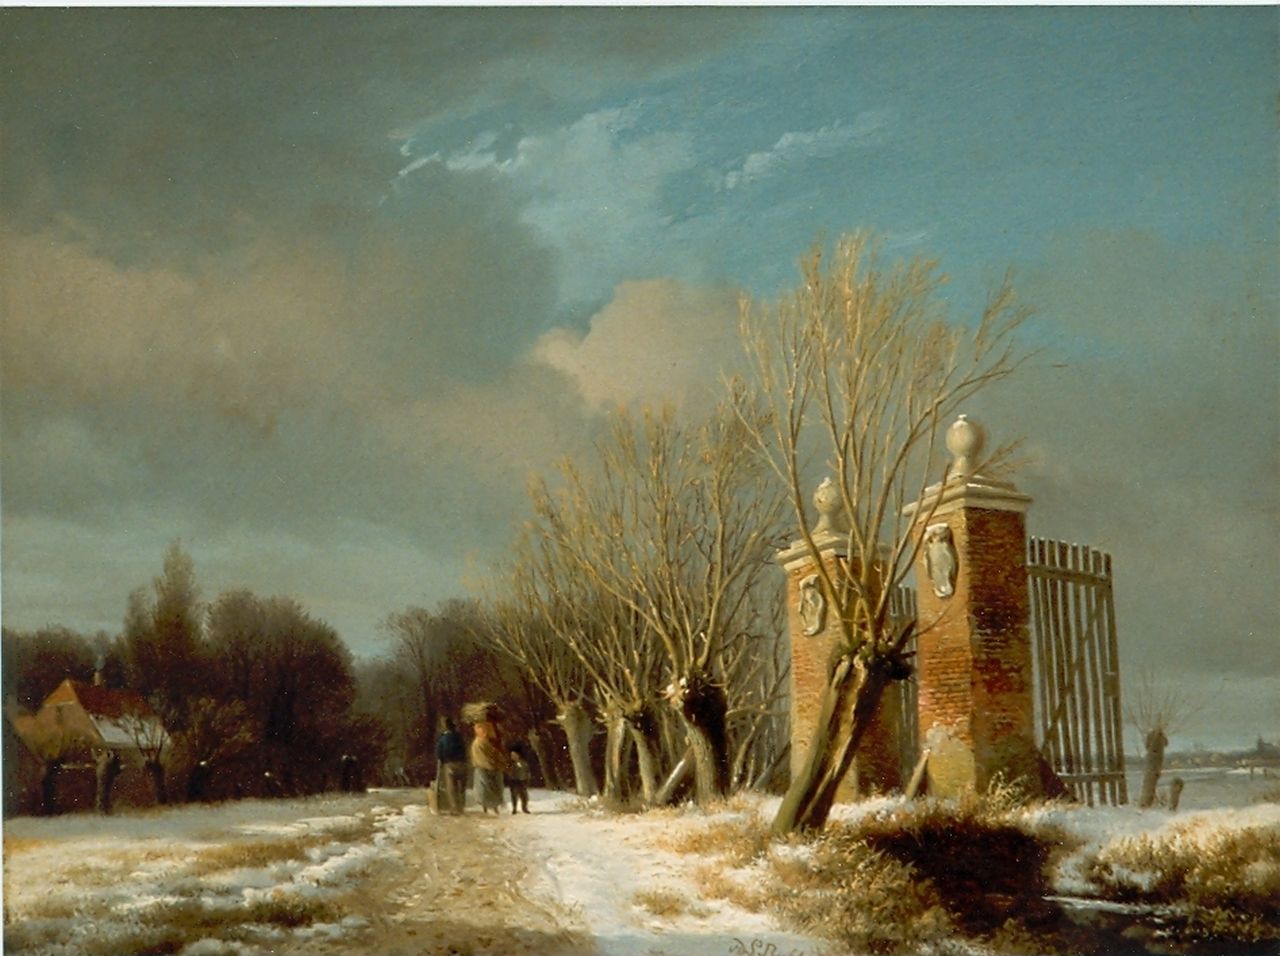 Sande Bakhuyzen H. van de | Hendrikus van de Sande Bakhuyzen, Travellers in a snow-covered landscape, oil on panel 21.0 x 16.9 cm, signed l.r.